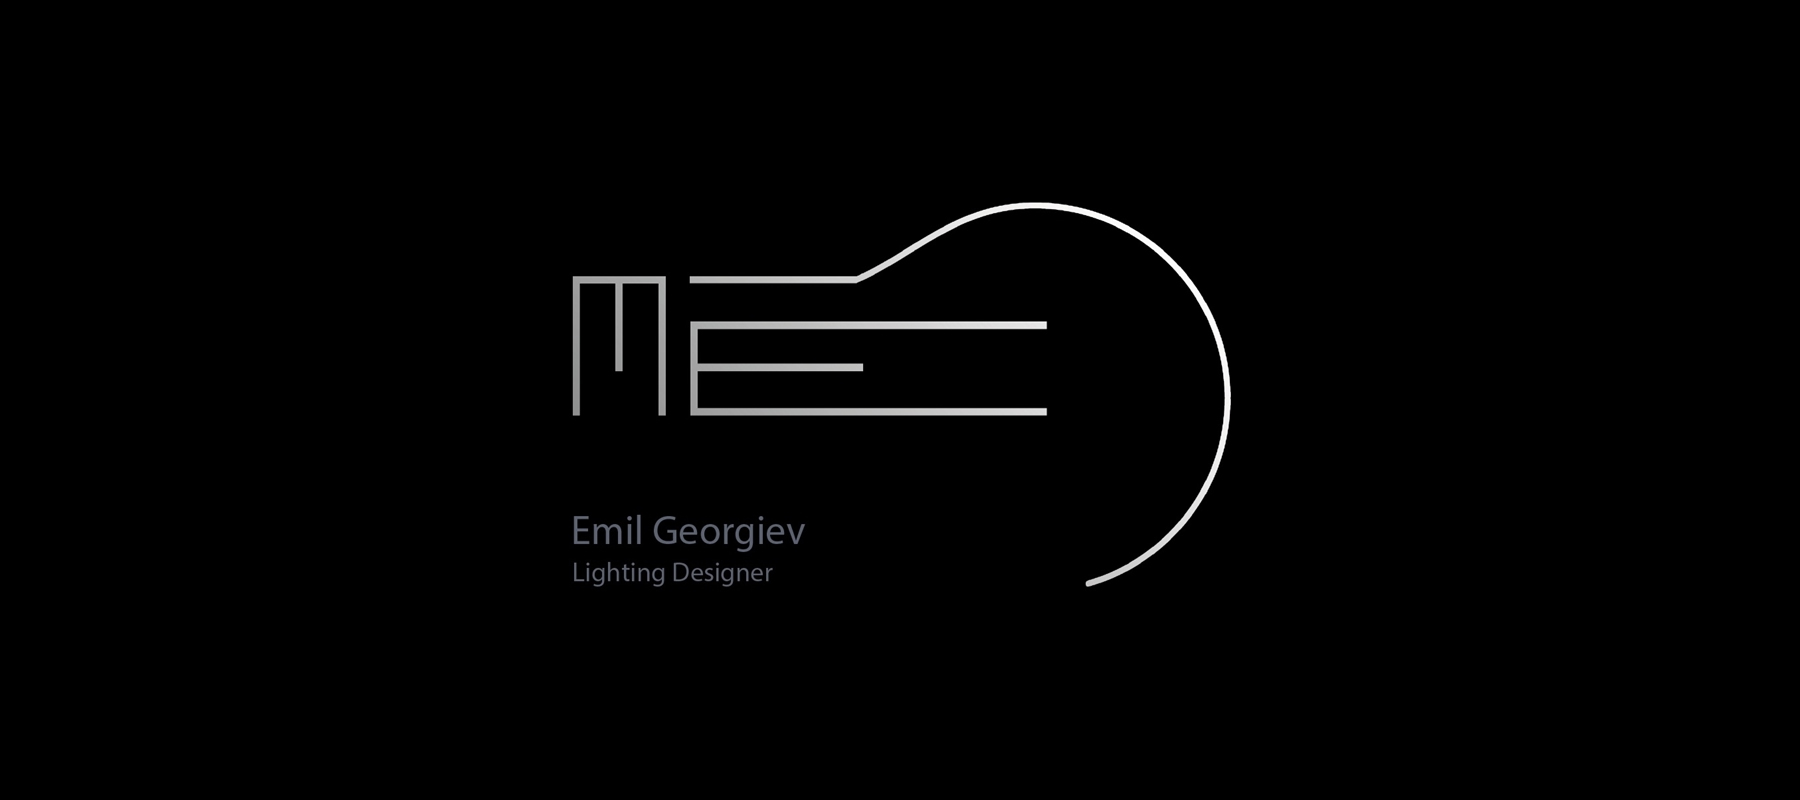 EMIL GEORGIEV